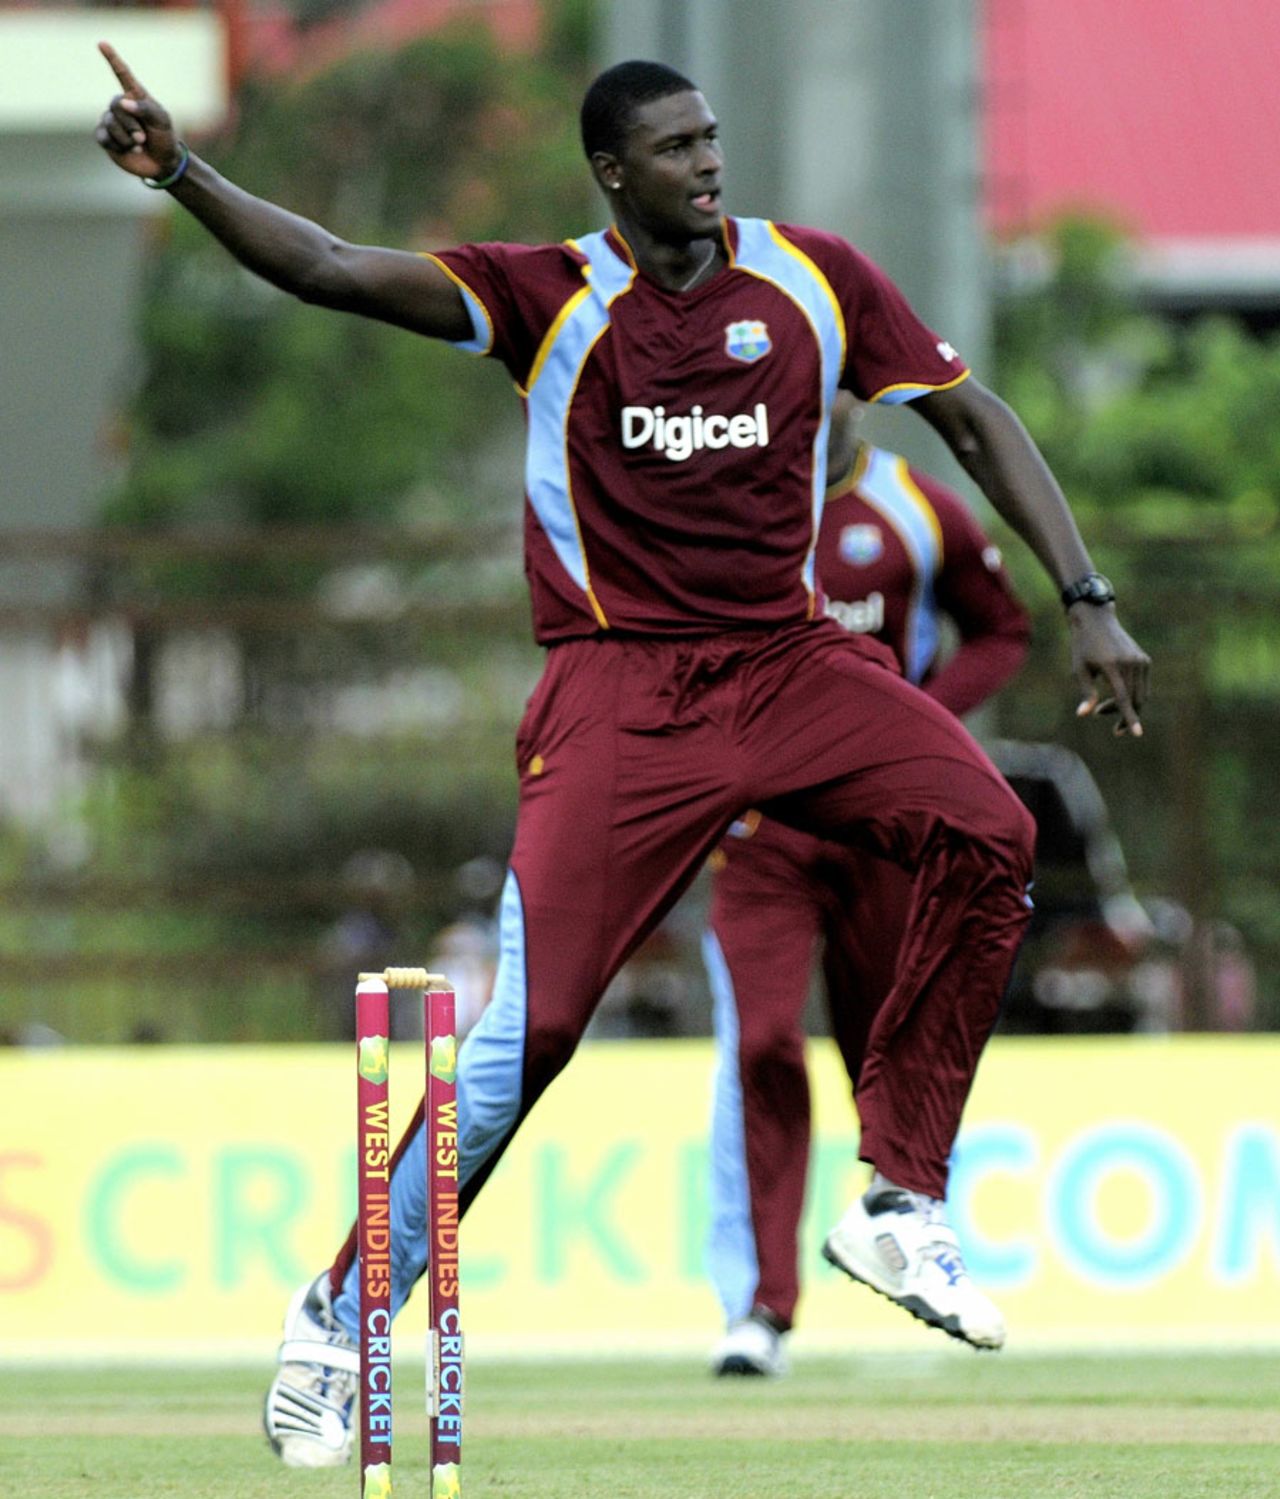 Jason Holder rejoices after picking up a wicket, West Indies v Pakistan, 1st ODI, Providence, July 14, 2013